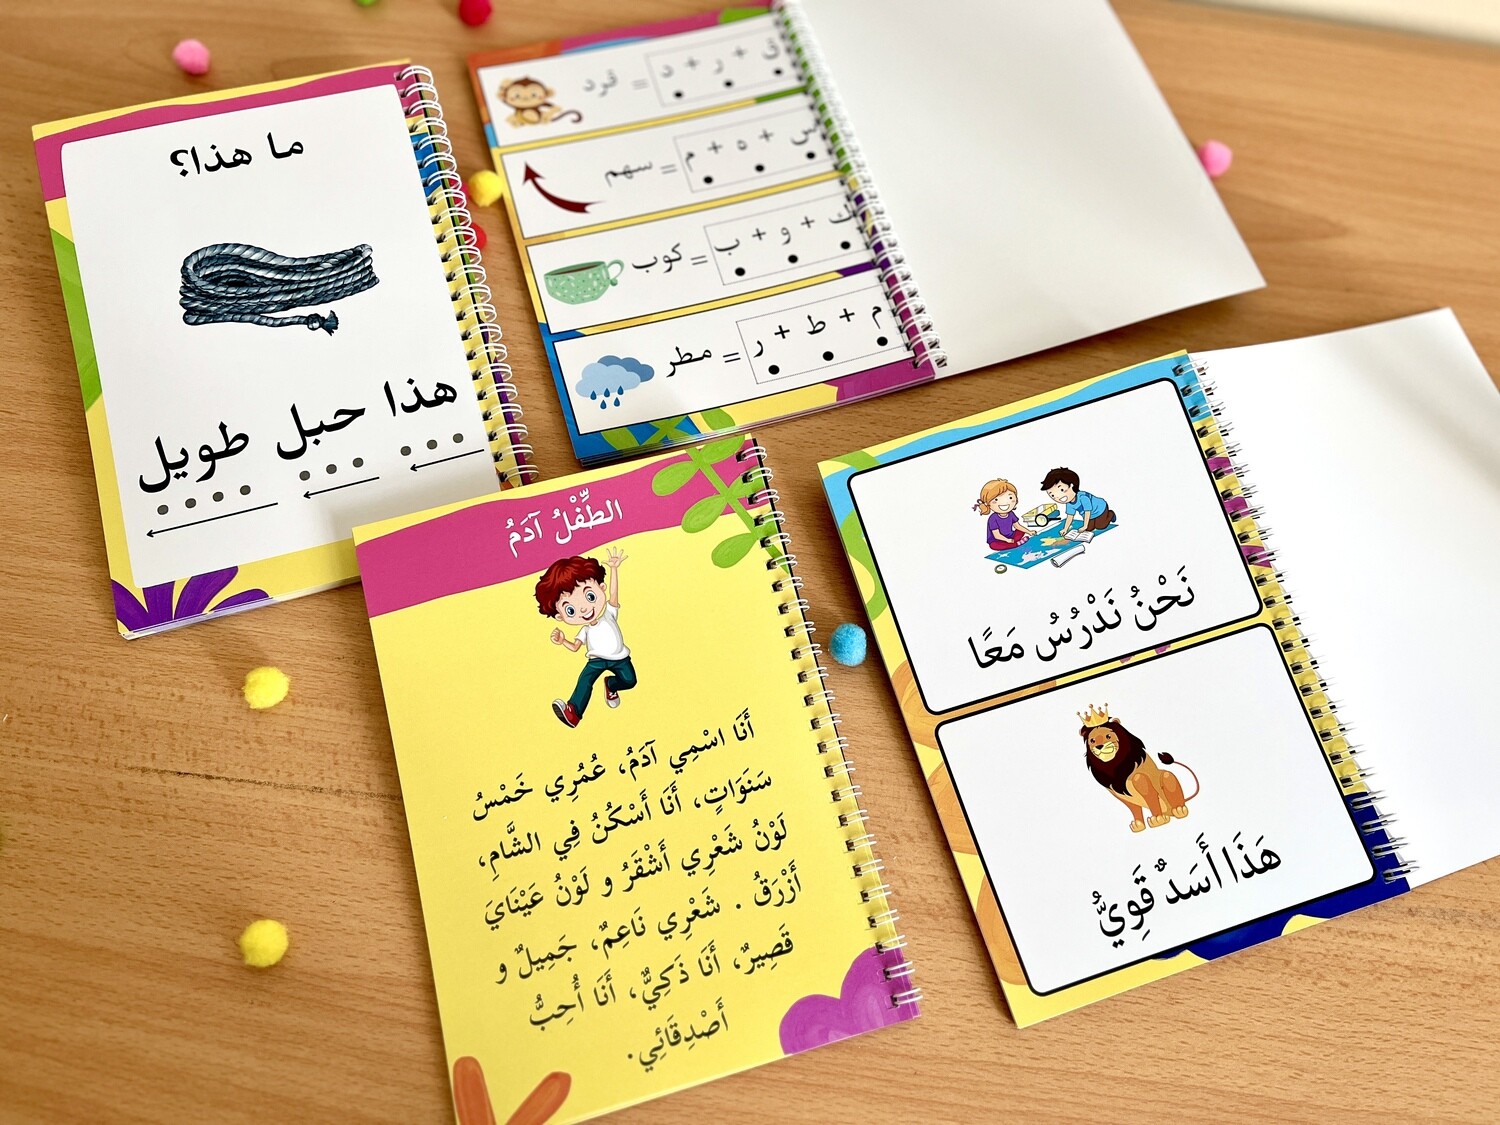 Early Readers Reading Fluency Books for kids in Arabic. 4 Levels.